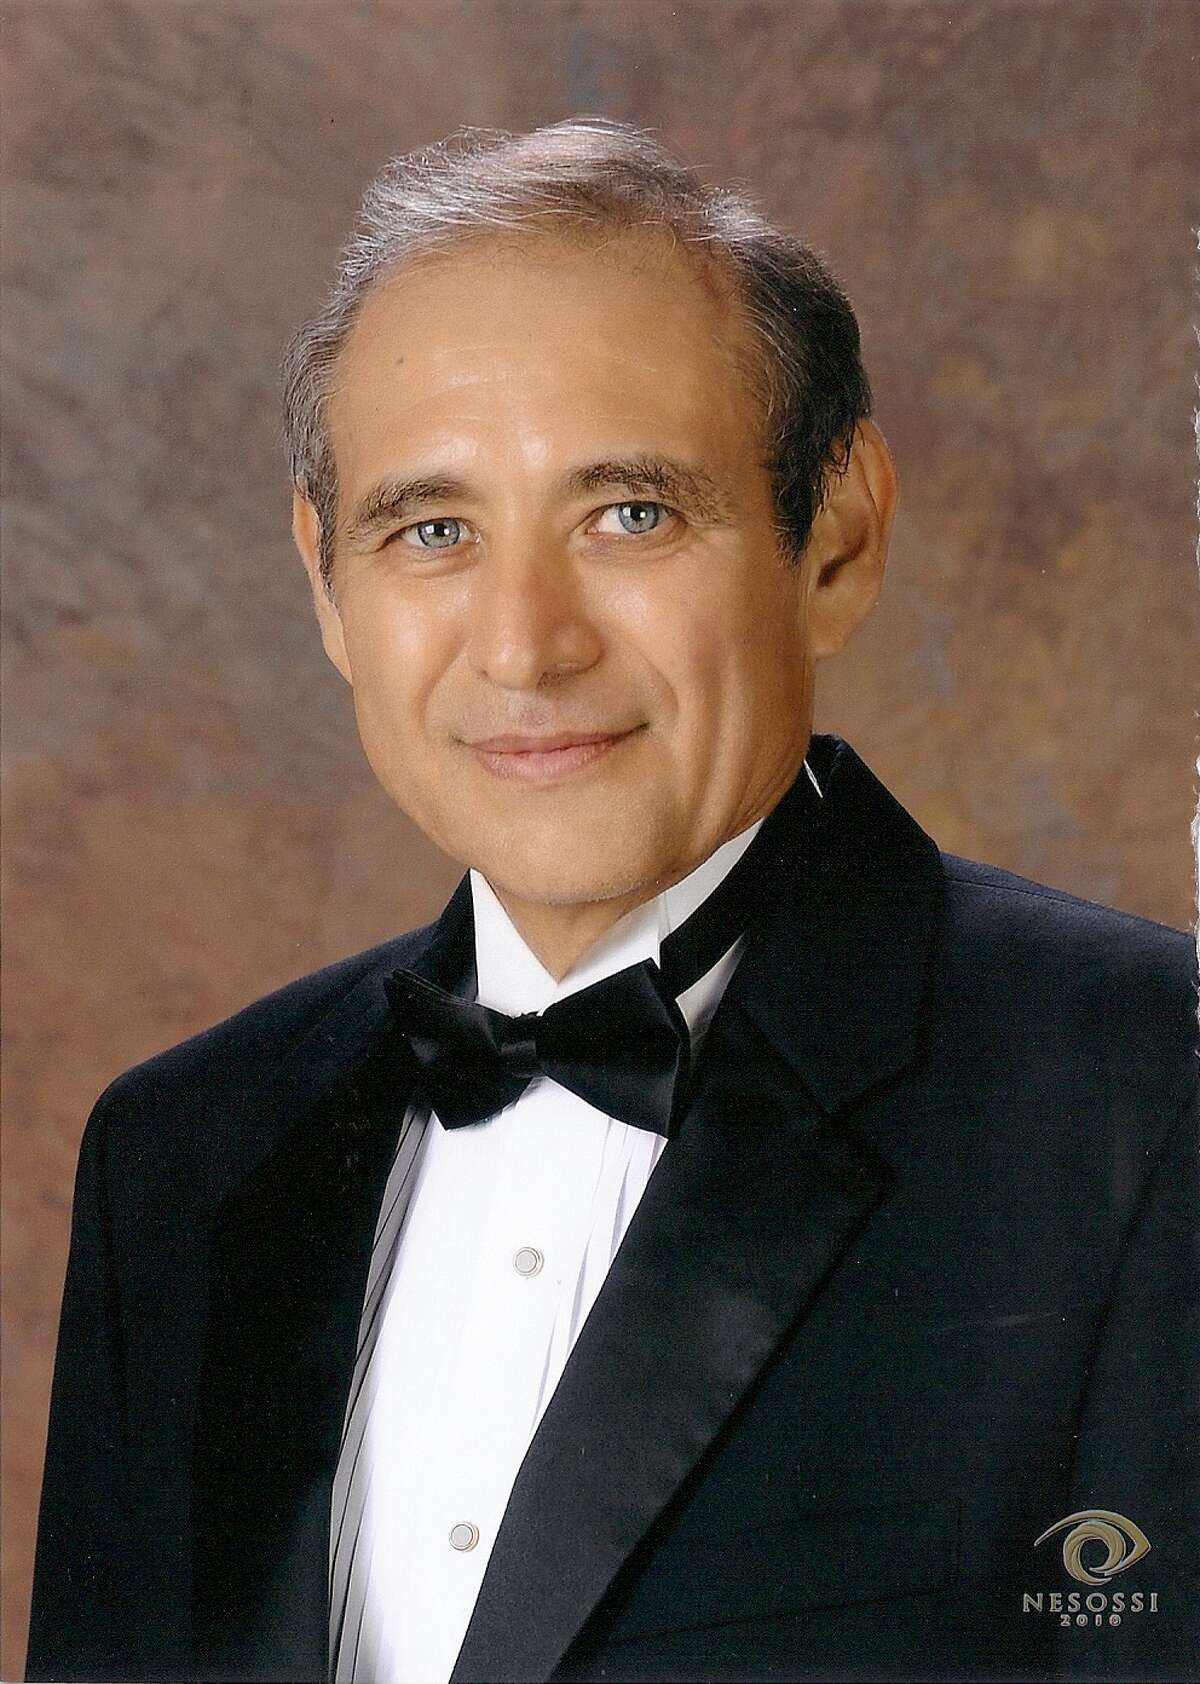 Reynaldo Ochoa